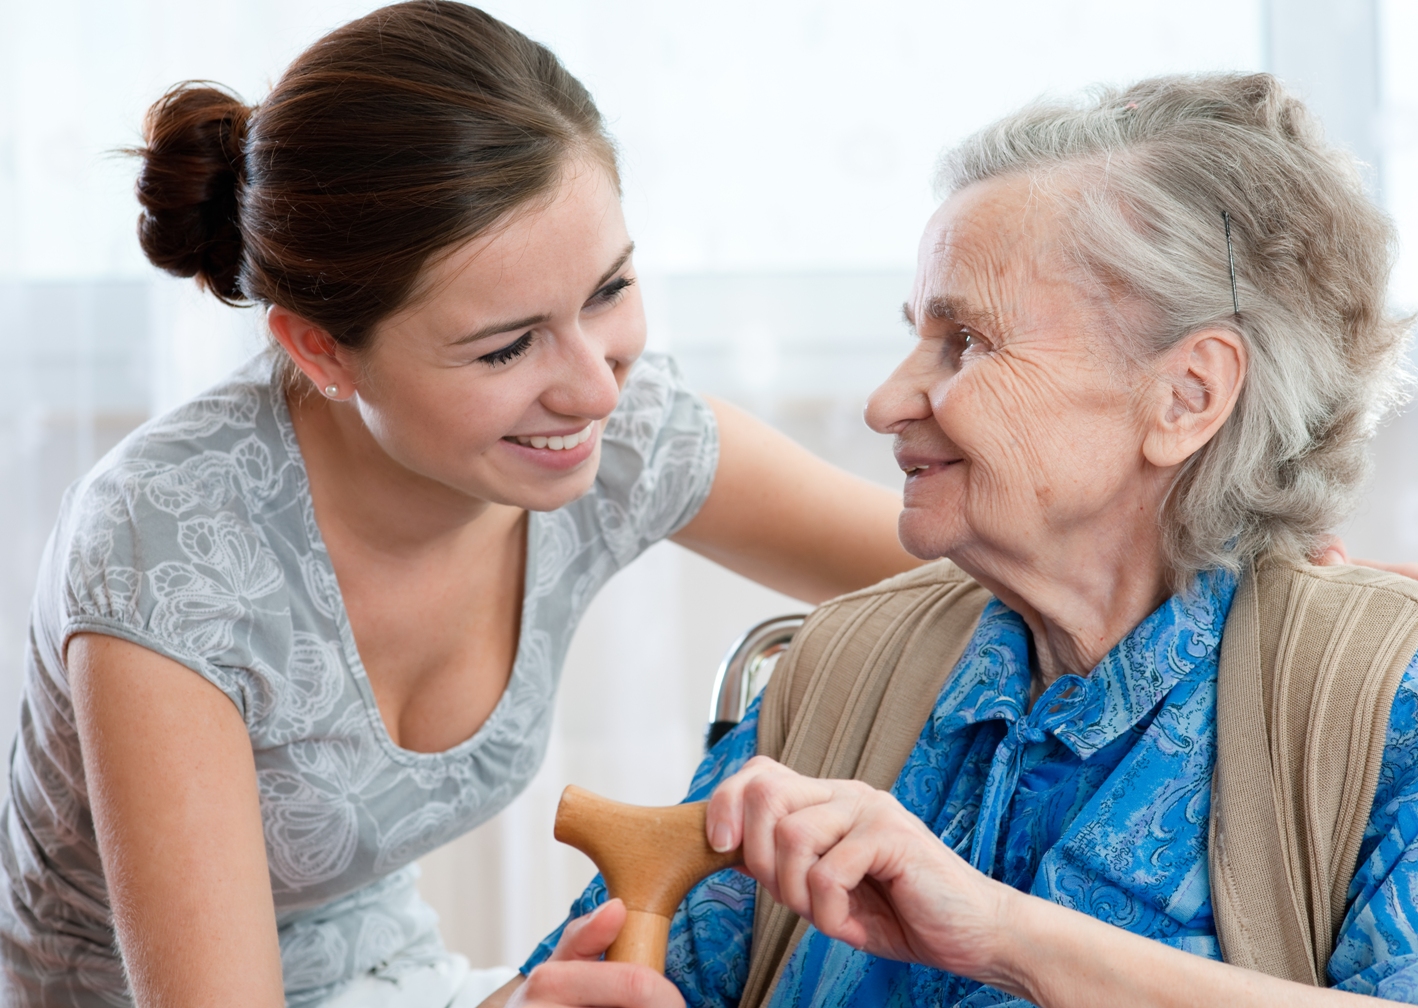 Quarter of homecare services for elderly are substandard, says health regulator